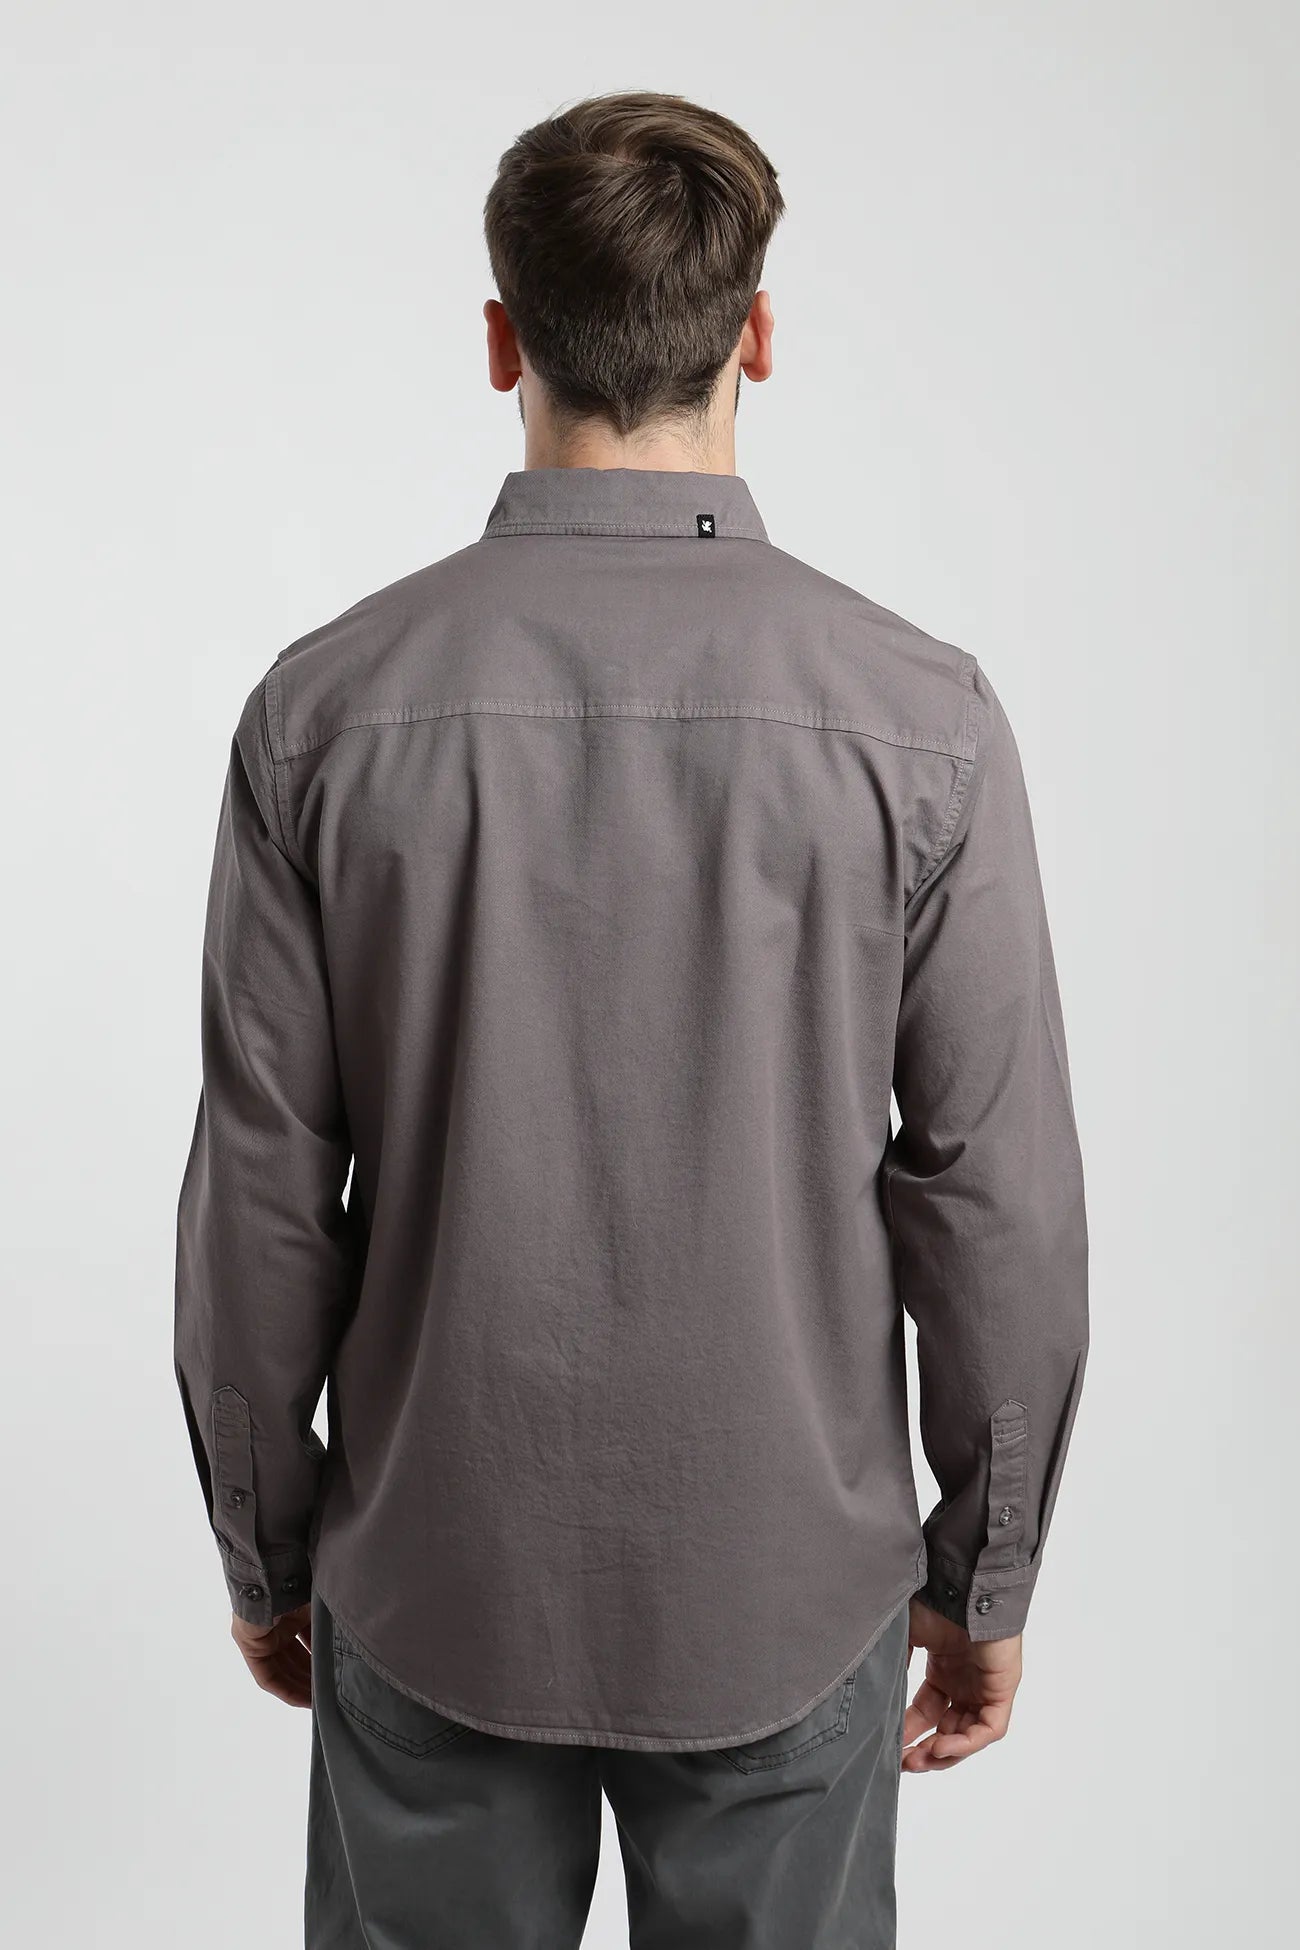 Camisa manga larga Sarga café - Algodón orgánico